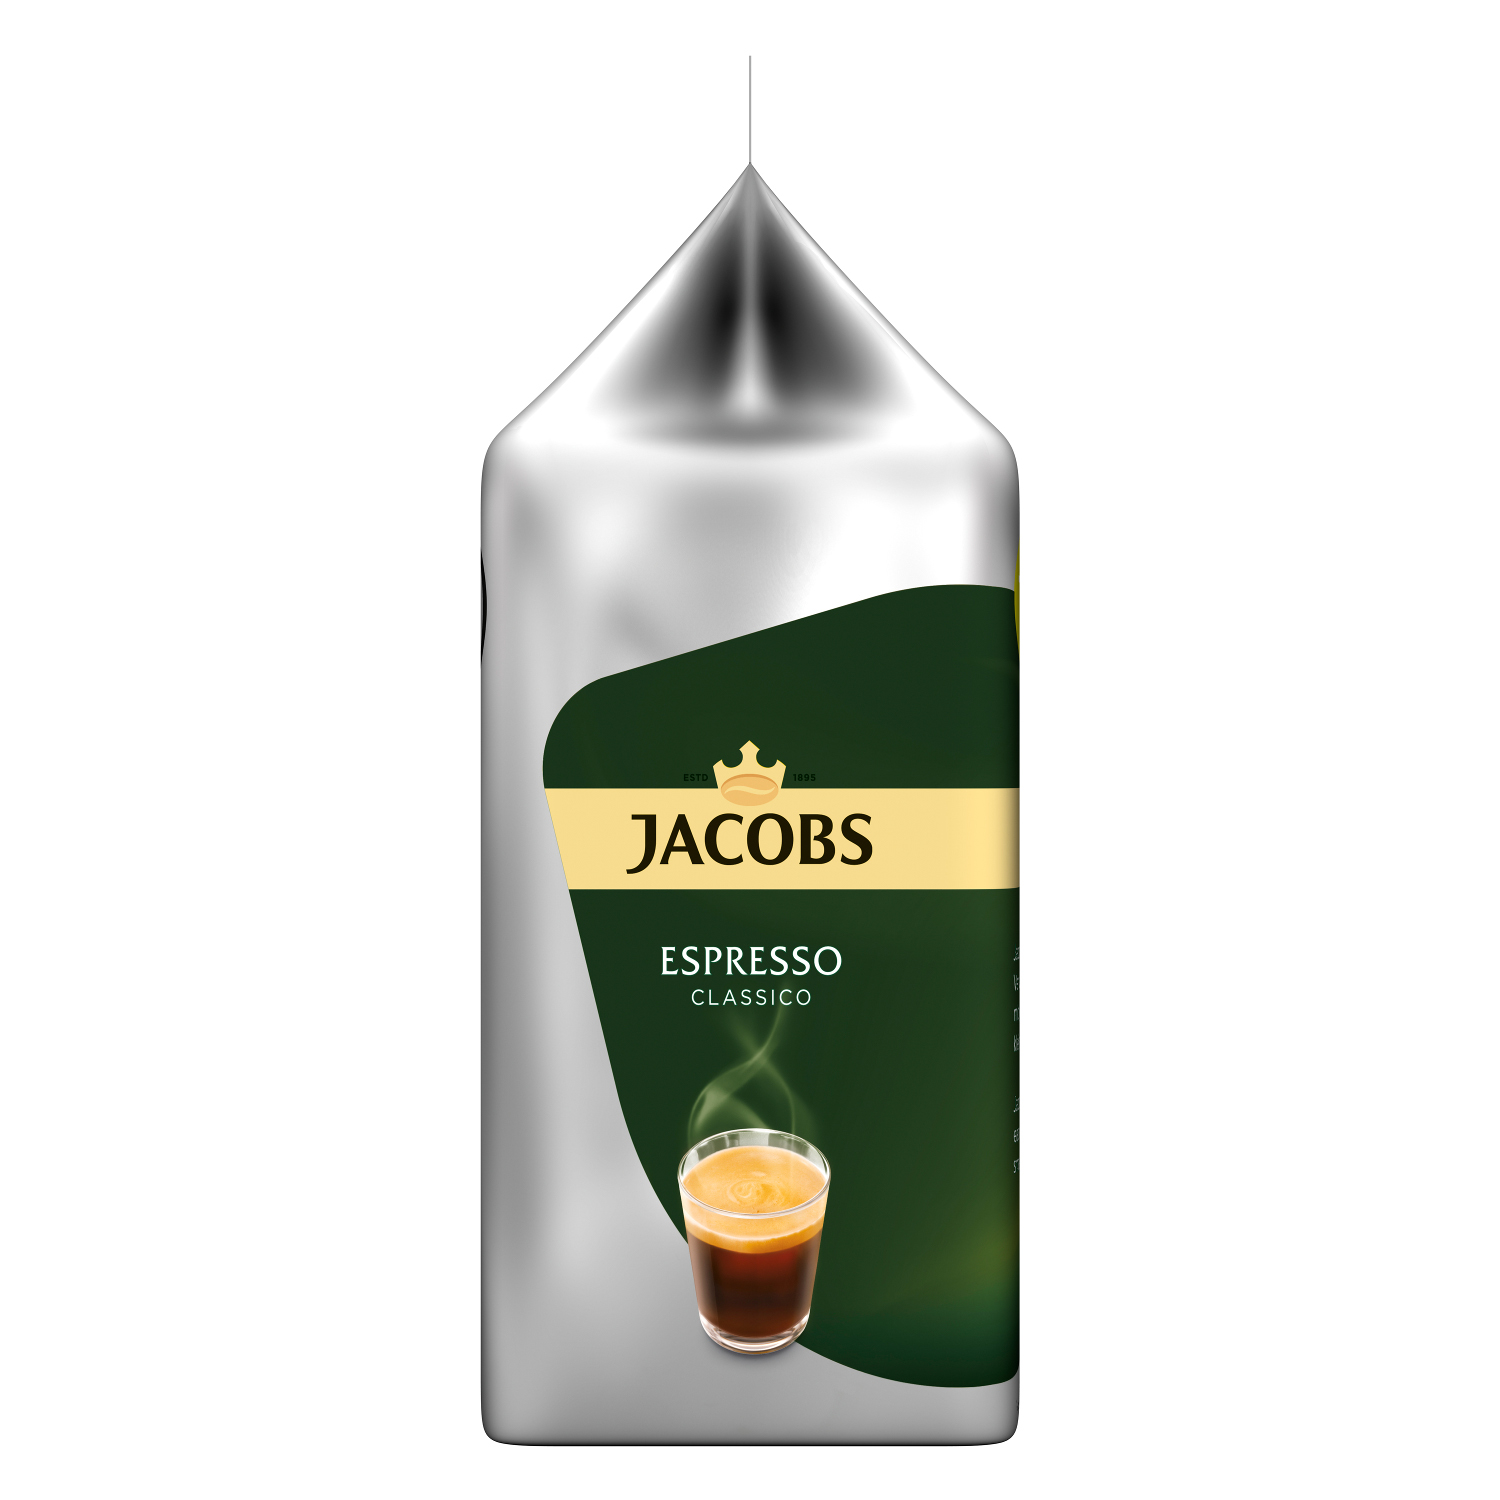 TASSIMO Jacobs Espresso Classico 16 5 Kaffeekapseln Maschine (Tassimo (T-Disc x Discs System)) Getränke T